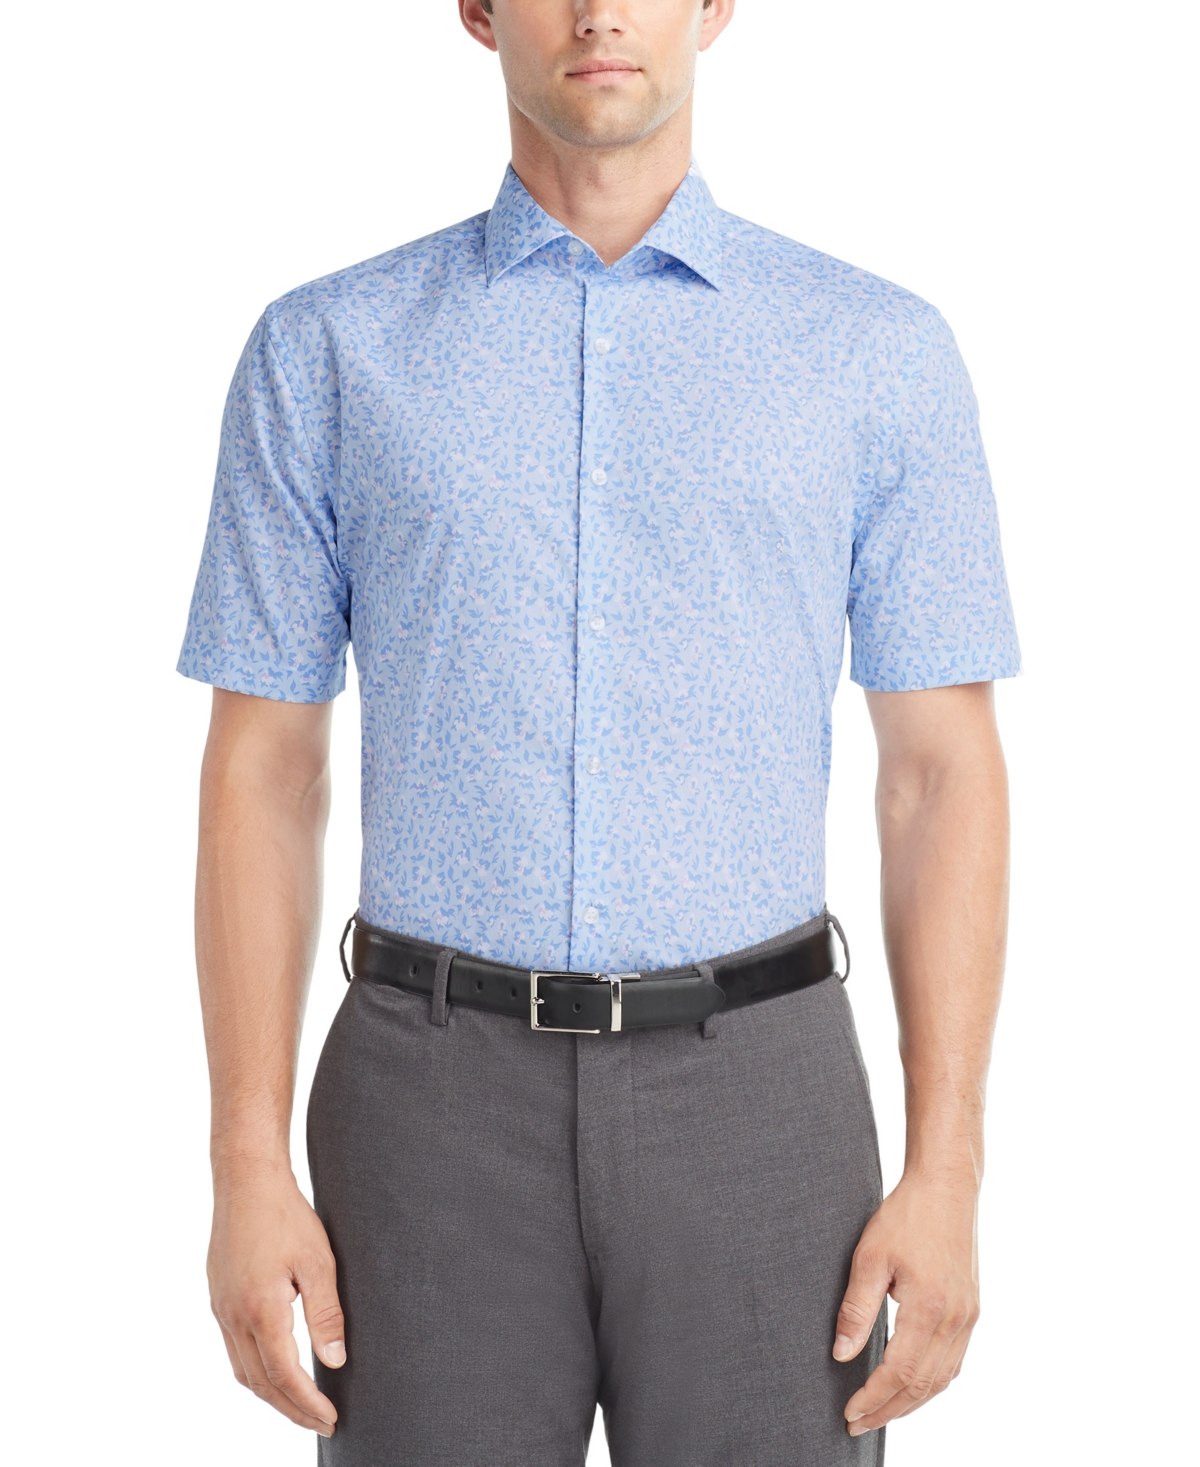 Men's Slim-Fit Flex Collar Short-Sleeve Dress Shirt - French Blue